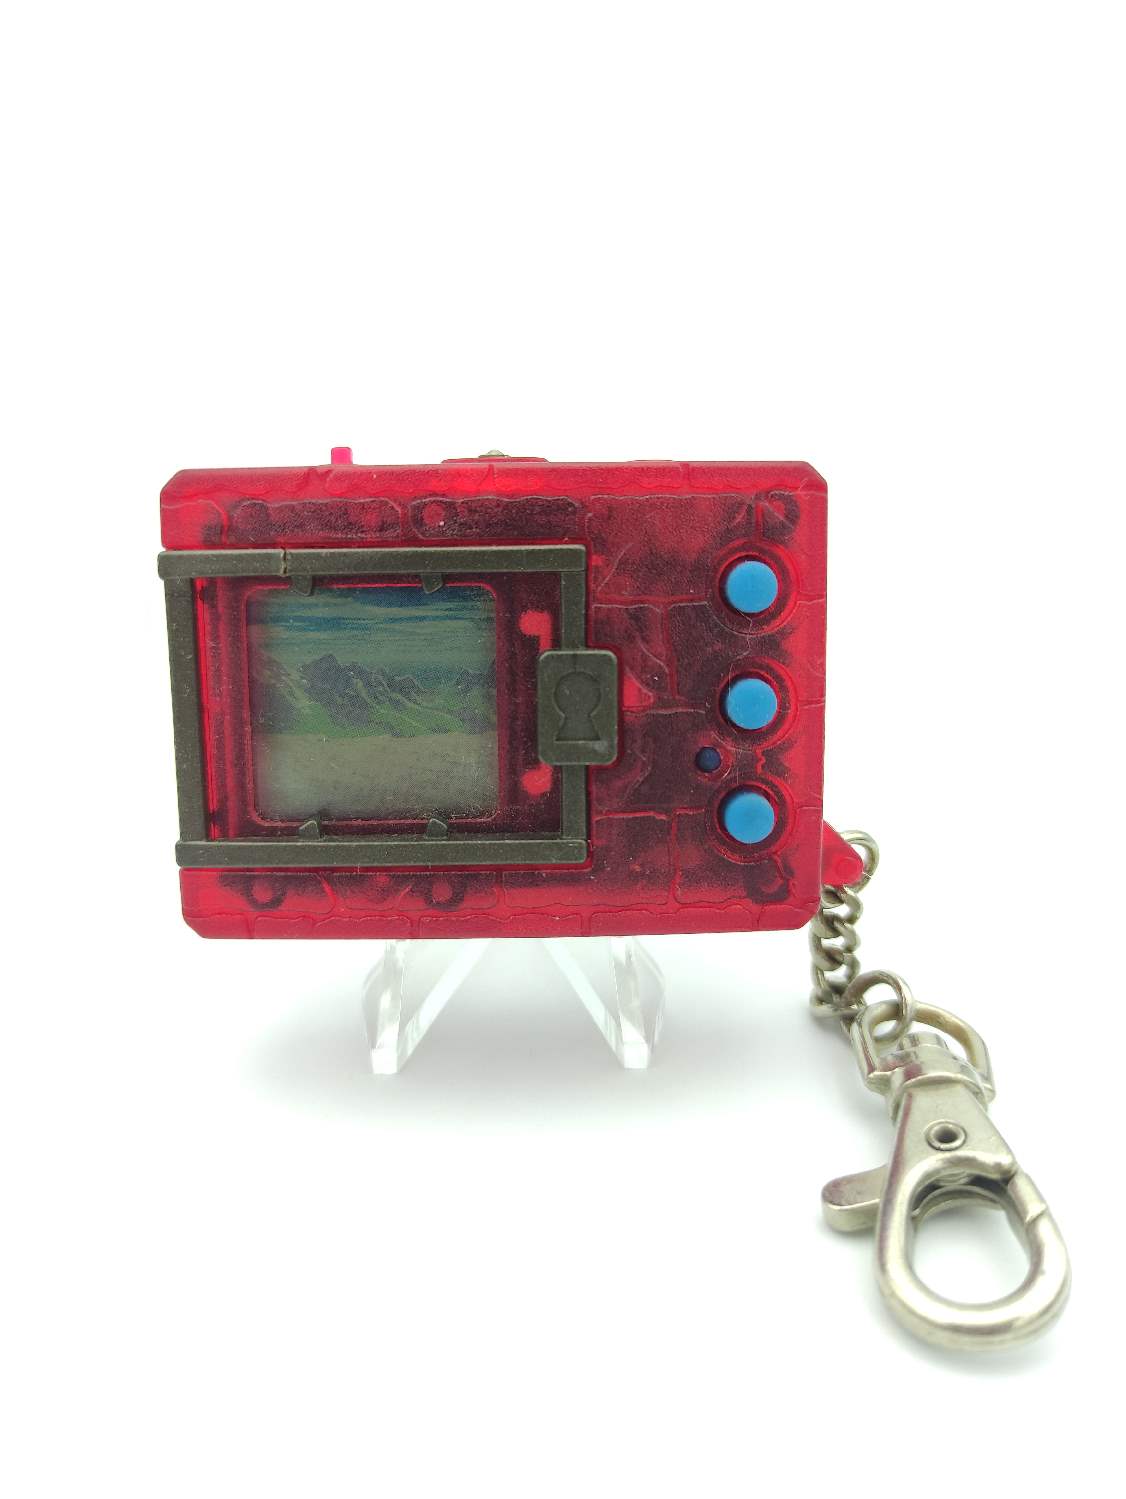 BRAND NEW SEALED BANDAI Tamagotchi Digimon Digital Pet Red Digivice 